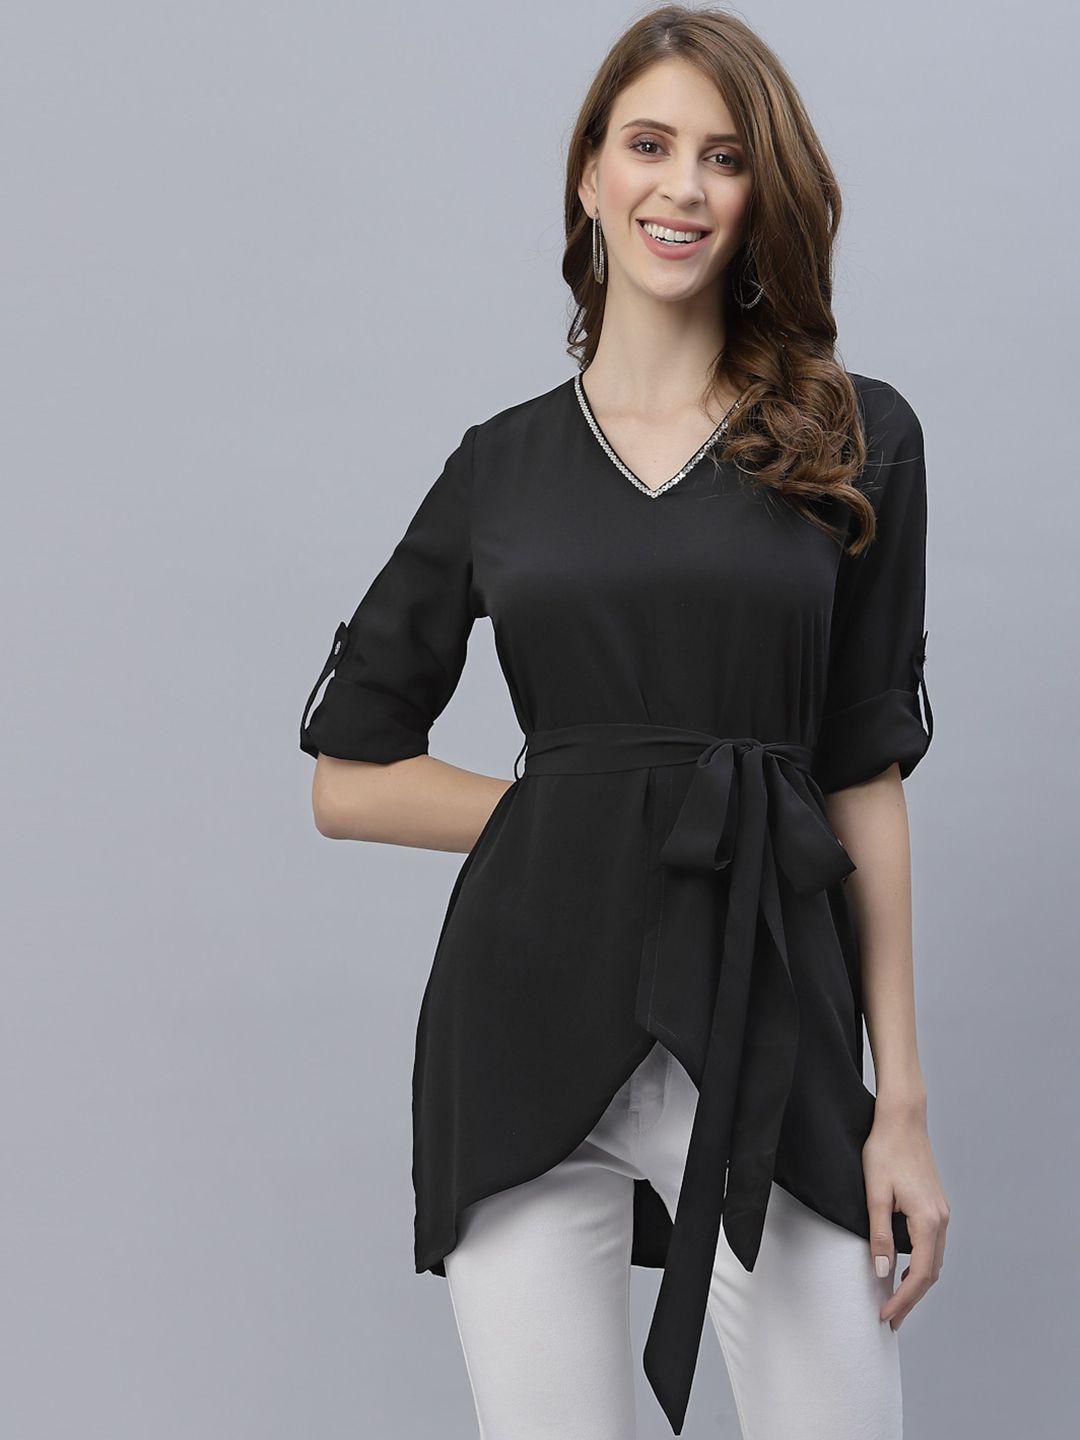 raassio black roll-up sleeves cinched waist longline top